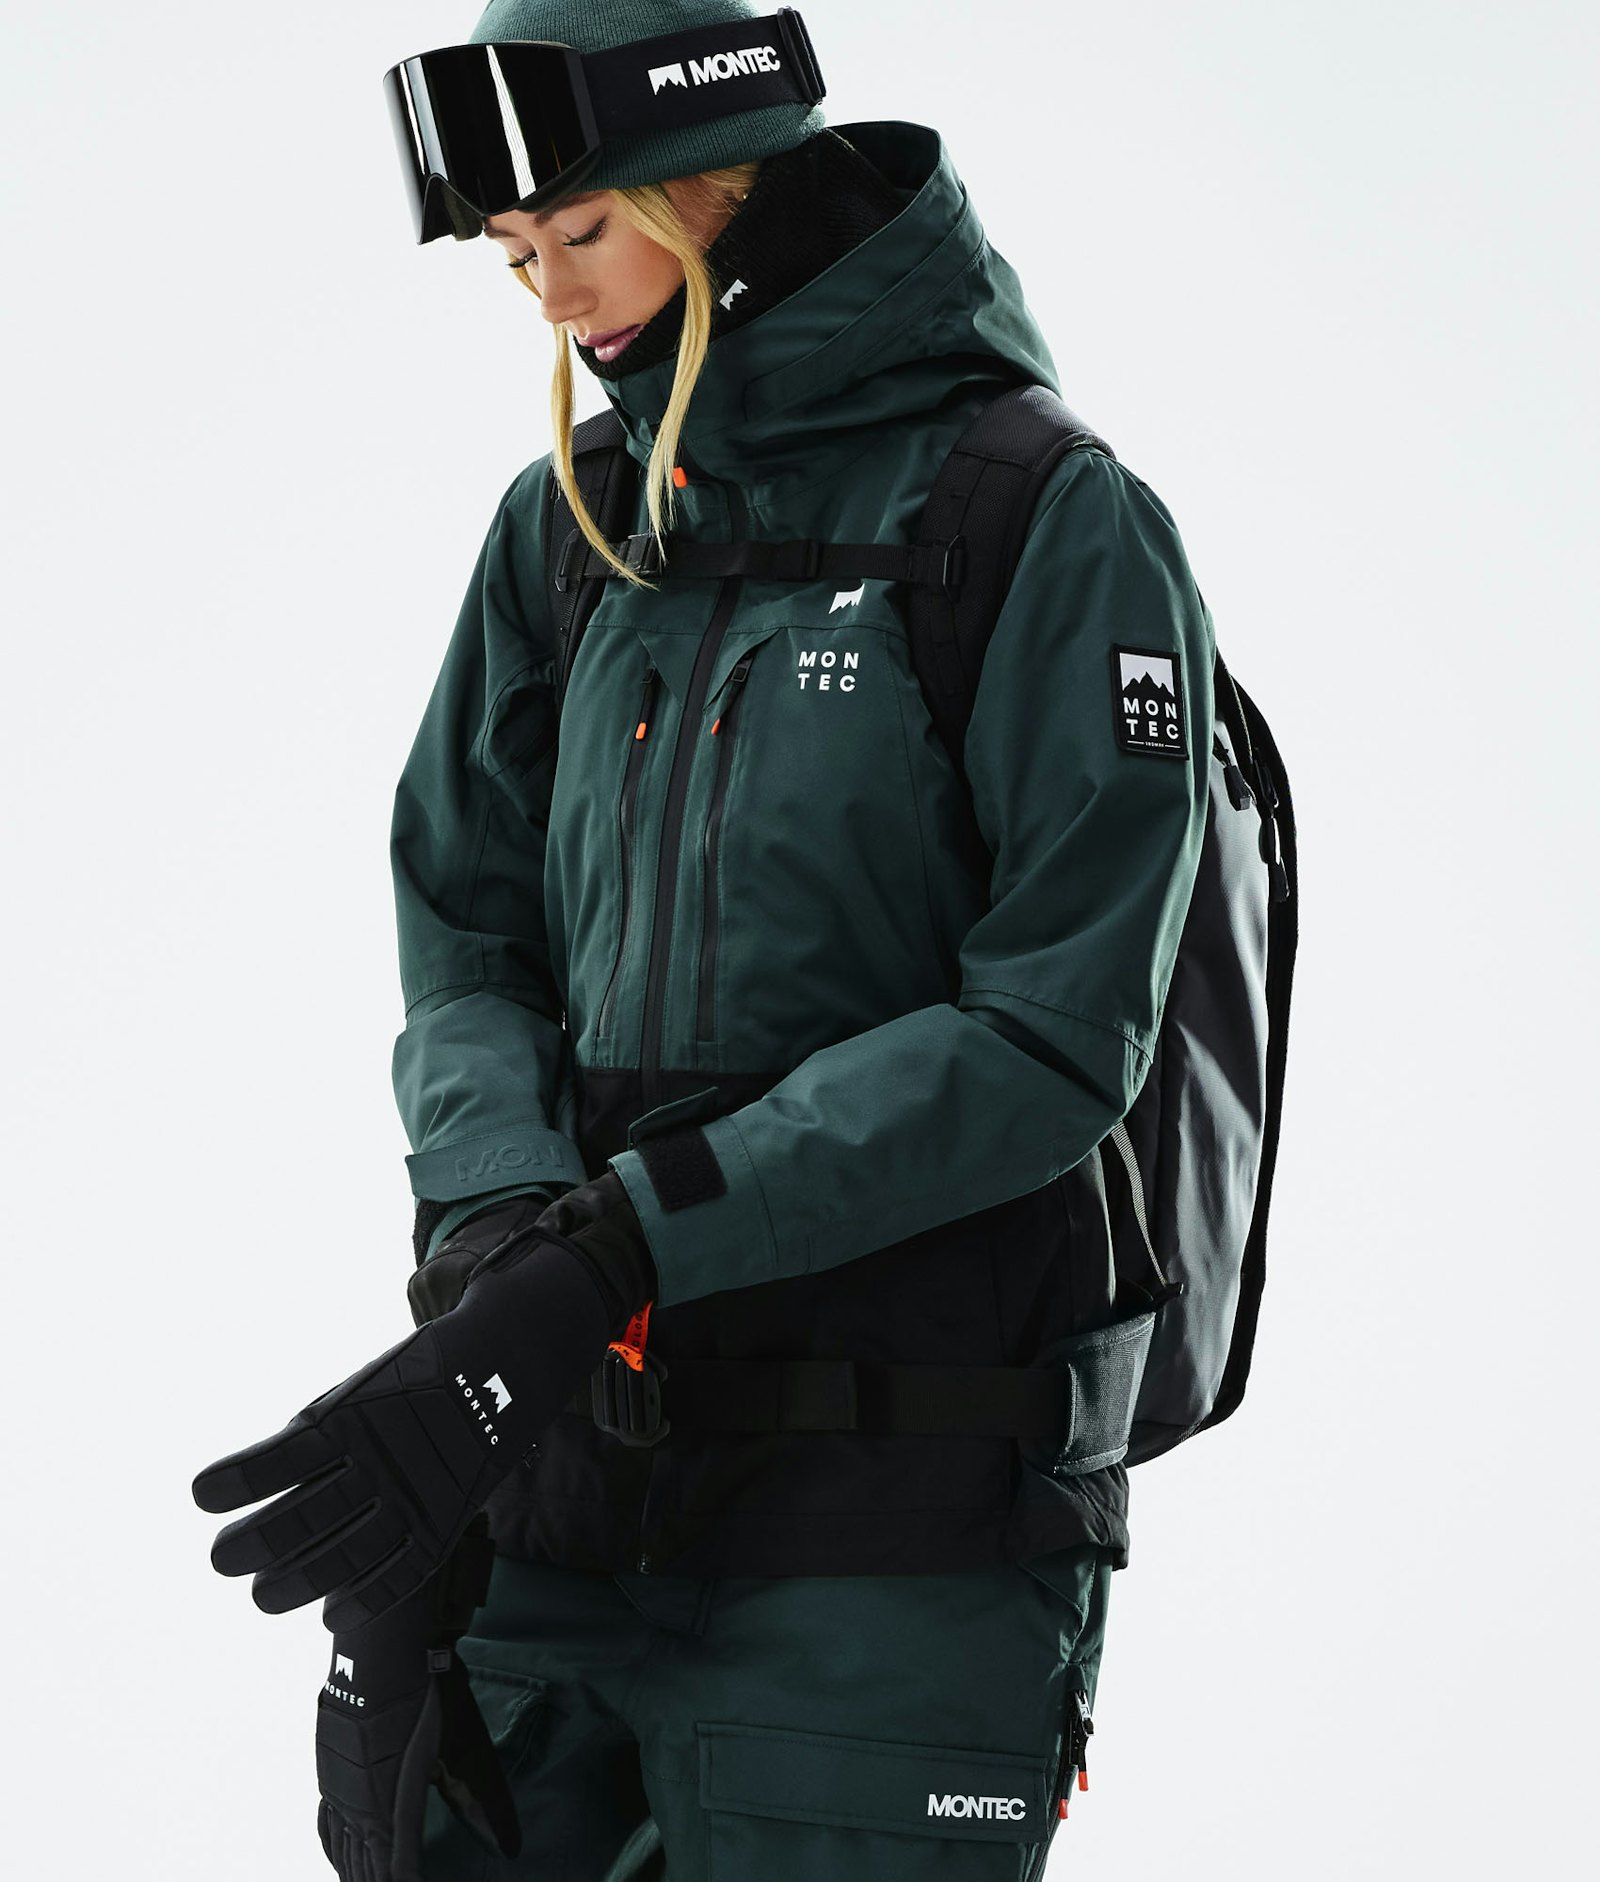 Moss W 2021 Snowboardjacke Damen Dark Atlantic/Black